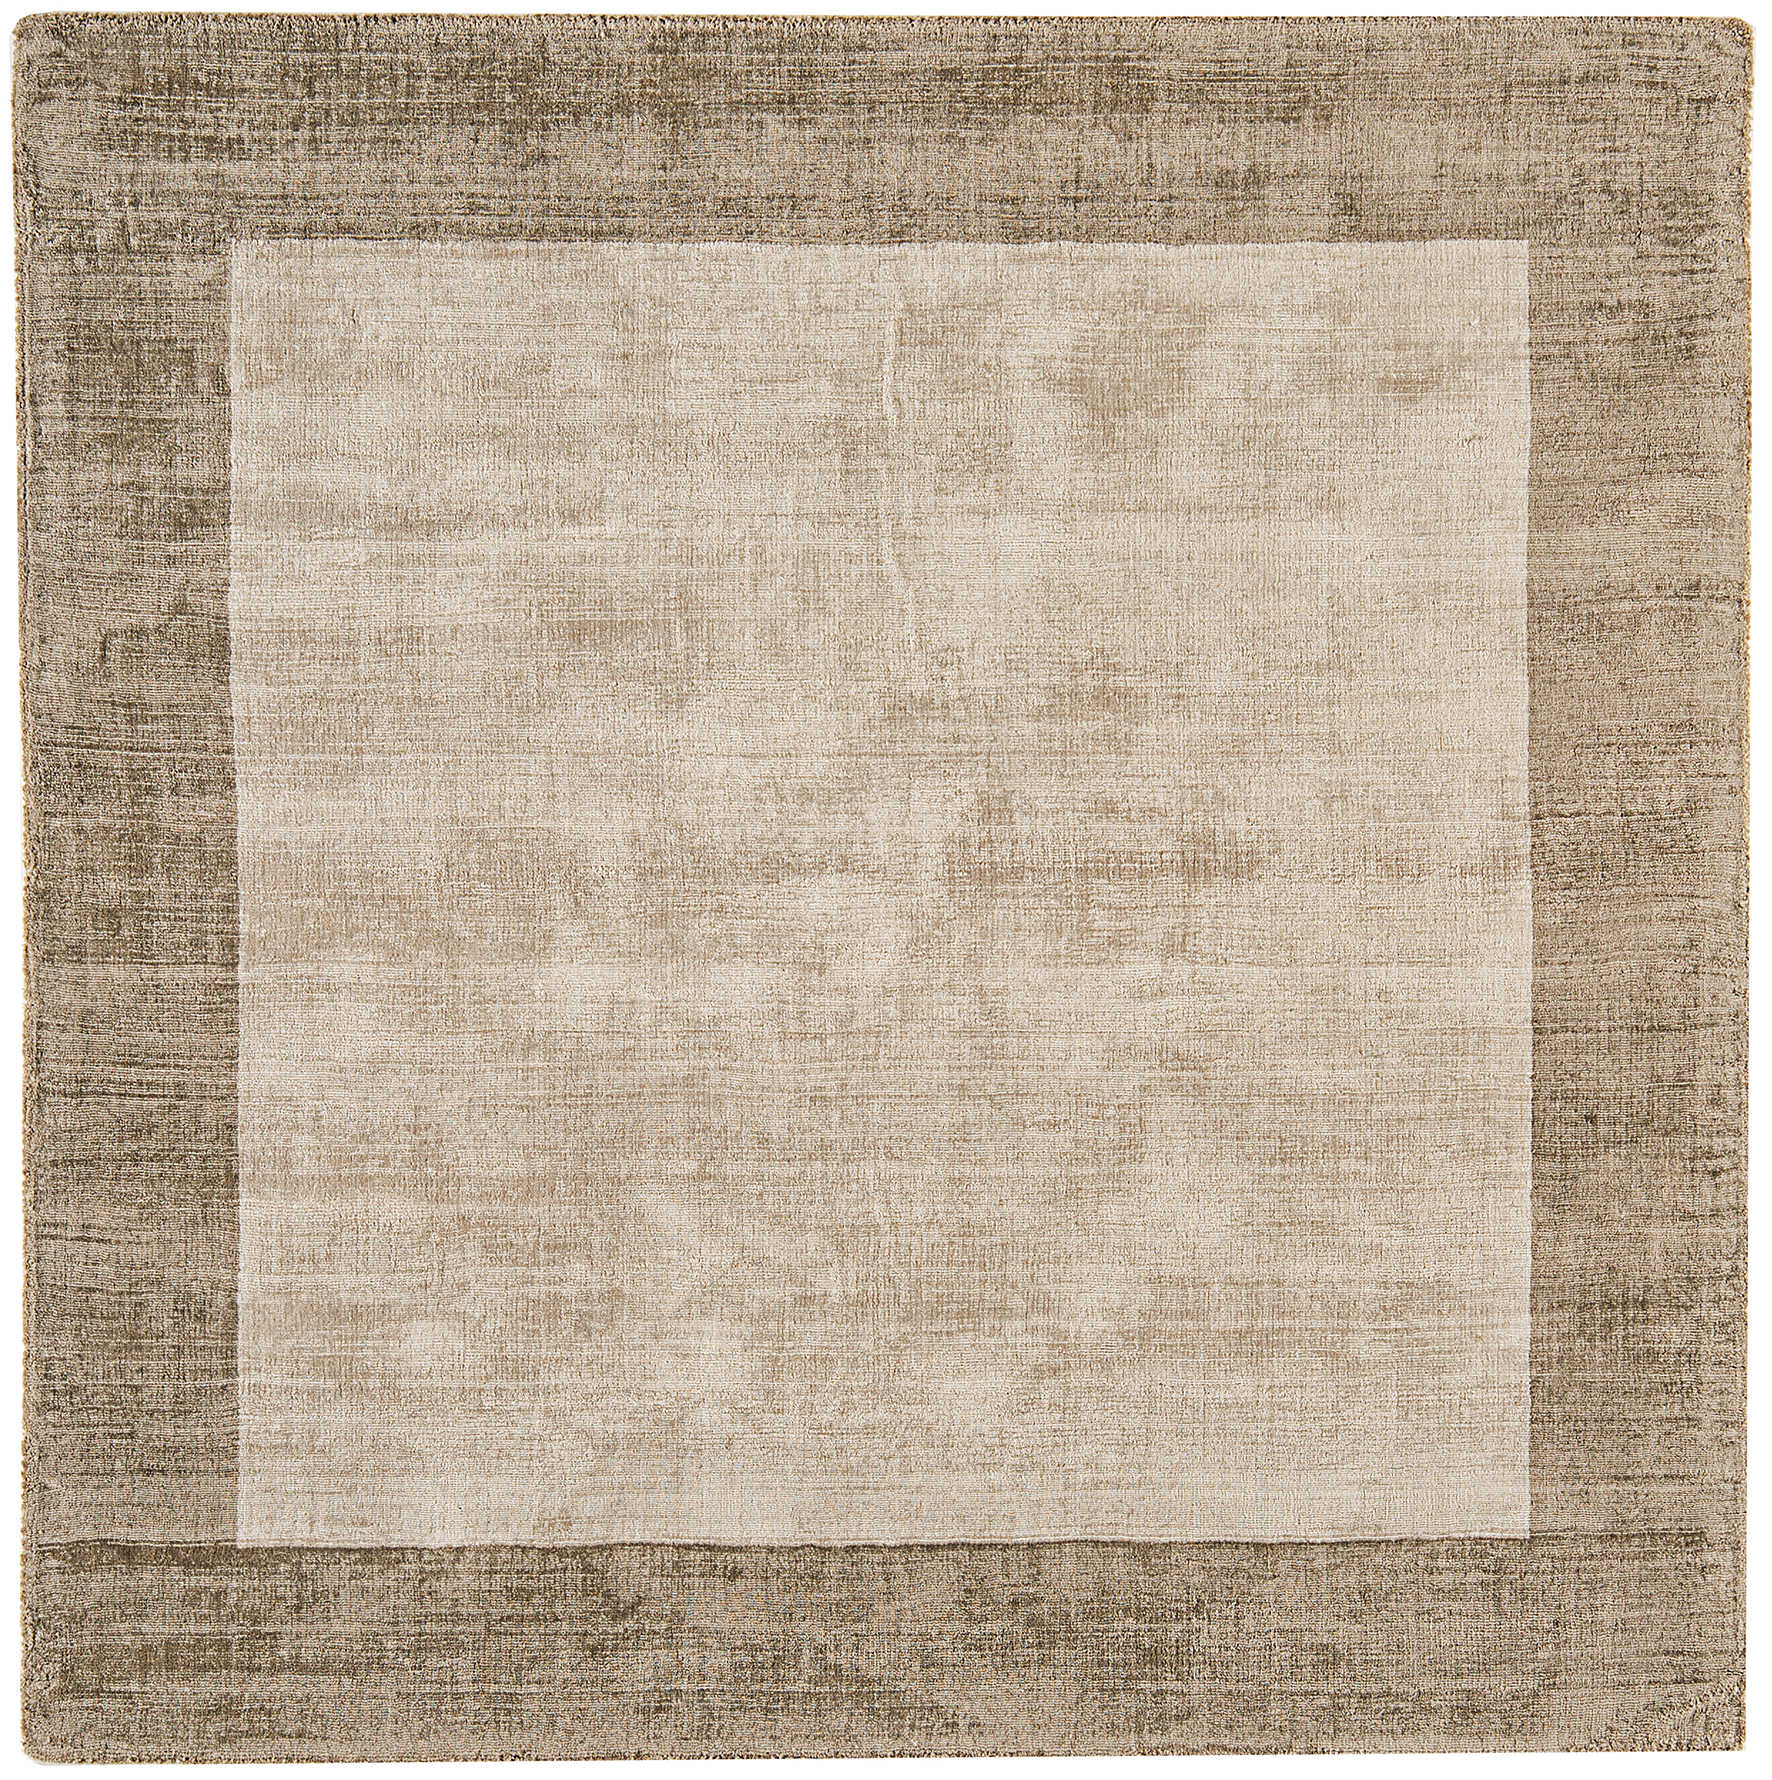 plain beige rug with border